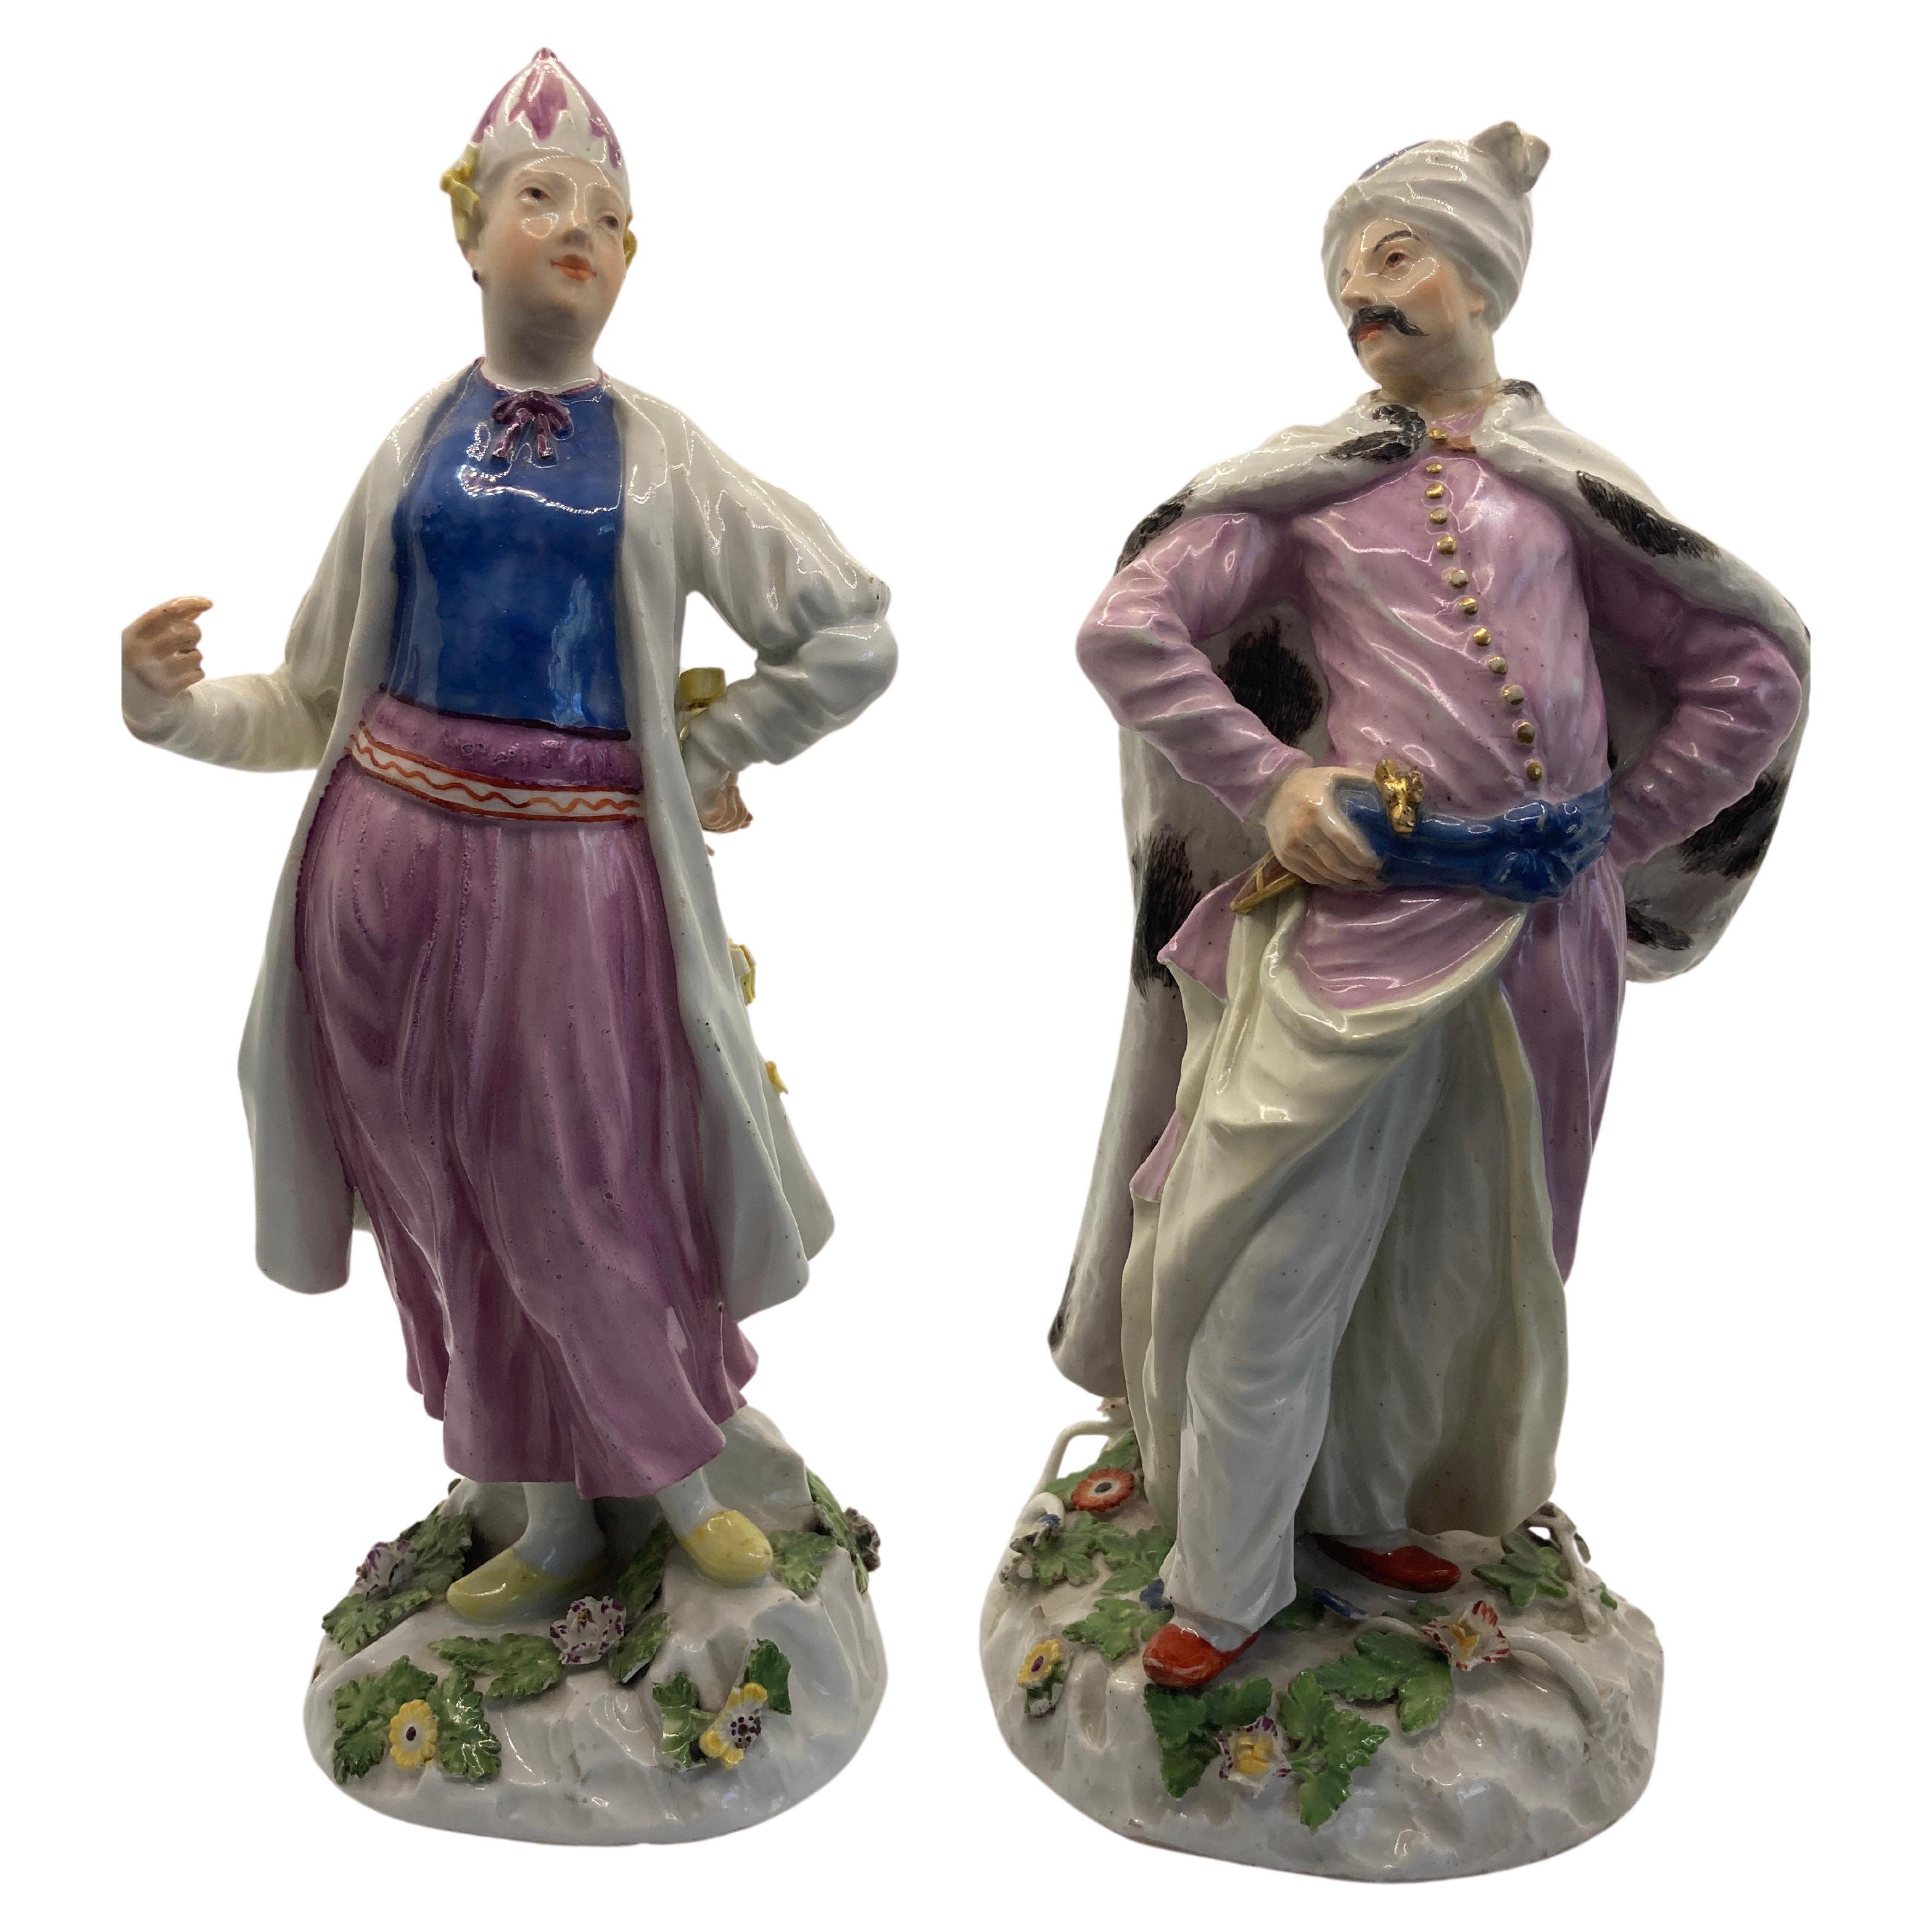 Figurines en porcelaine de Meissen du XVIIIe siècle, "Dame et gentleman turcs/persans". 